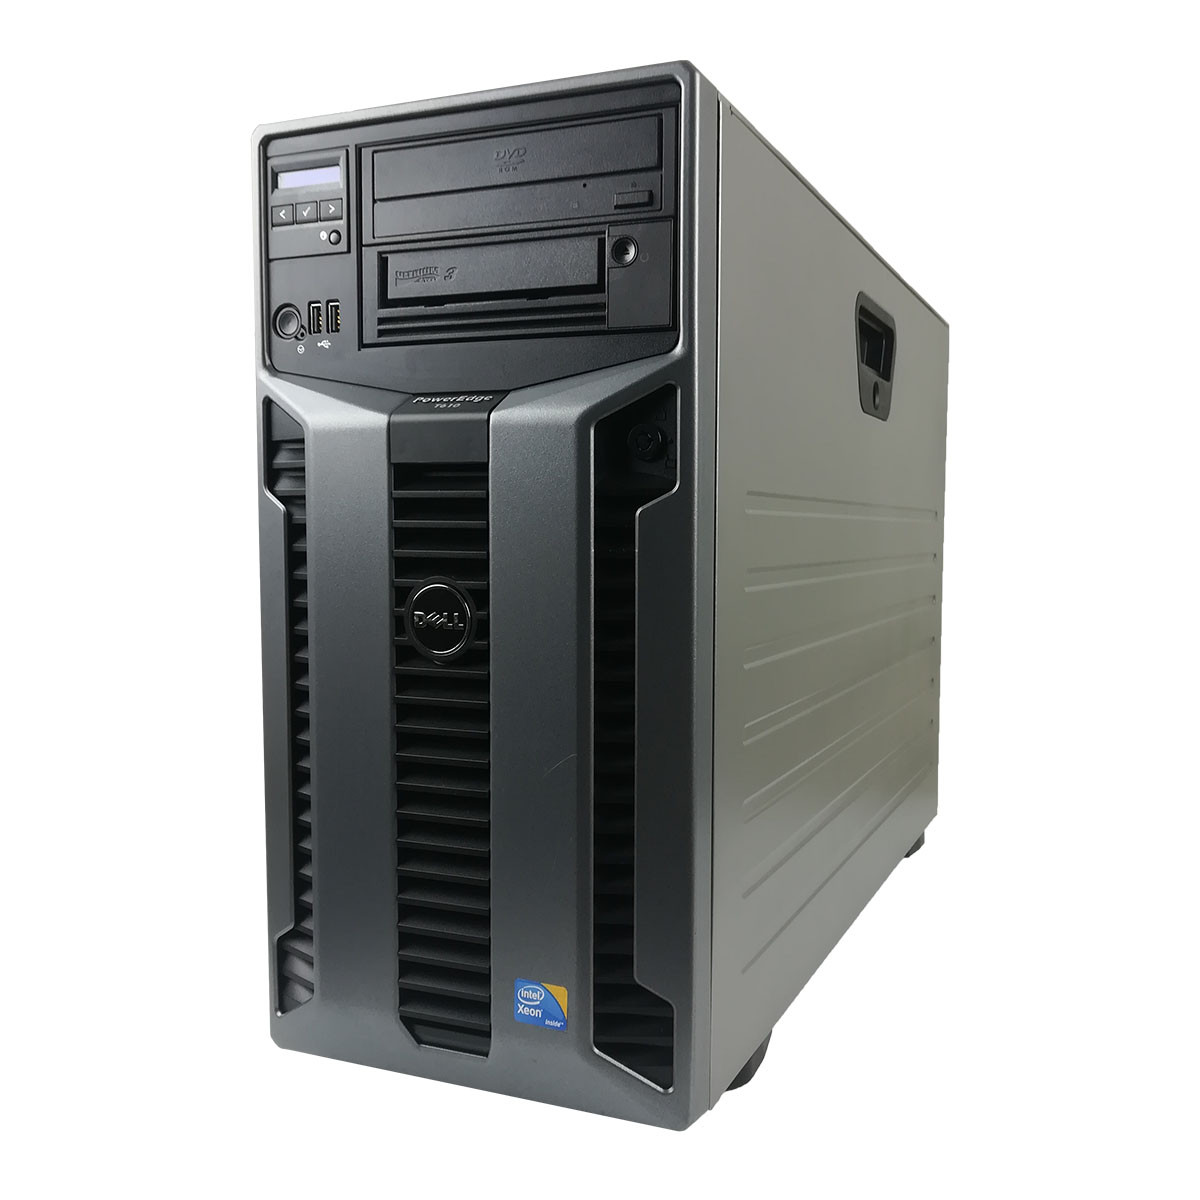 Server Dell PowerEdge T610 Tower, 2 x Intel Xeon Hexa Core X5650 2.66GHz - 3.06GHz, 96GB DDR3-ECC, Raid Perc 6i, 2 x 450GB SAS/15K + 6 x 2TB HDD SATA, DVD-ROM, Idrac 6 Enterprise, 2 PSU Hot Swap